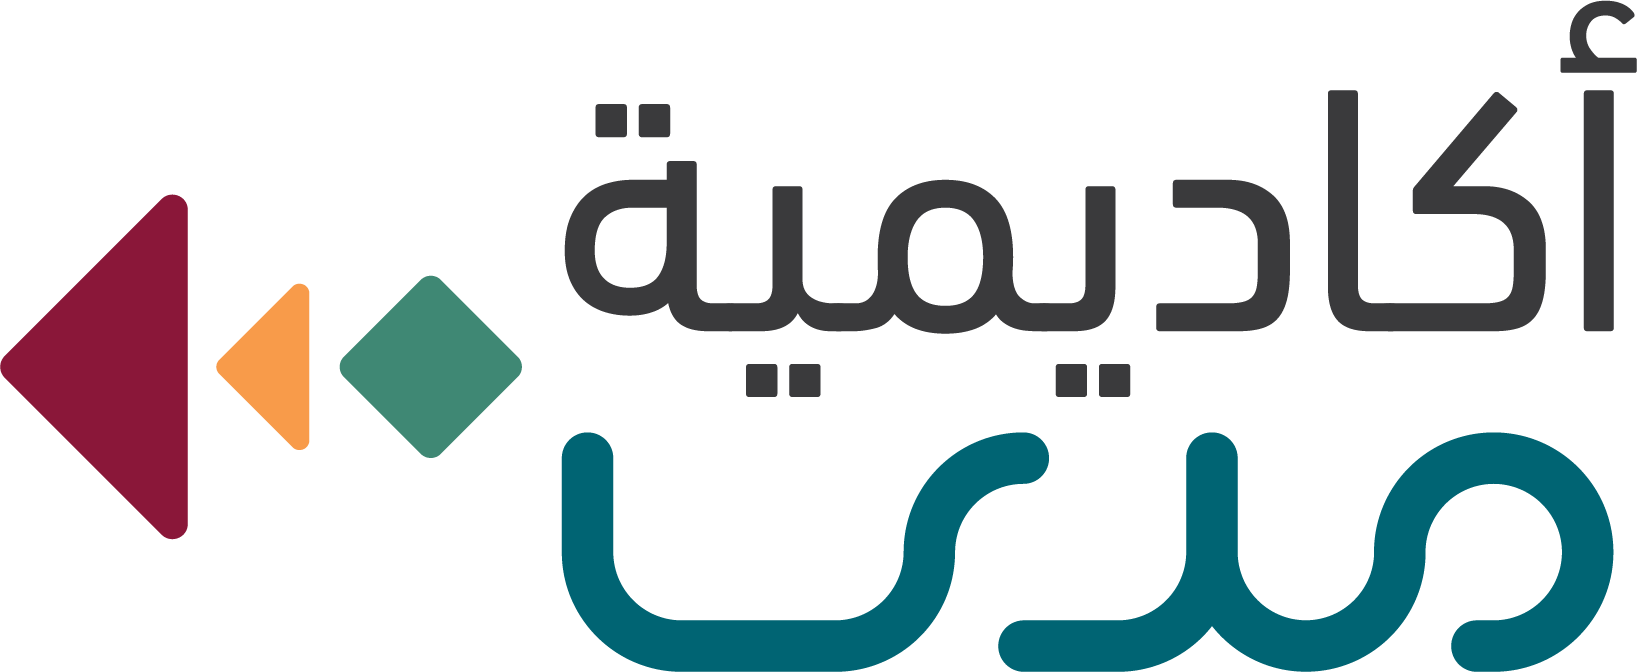 Mada Academy Home Page Arabic